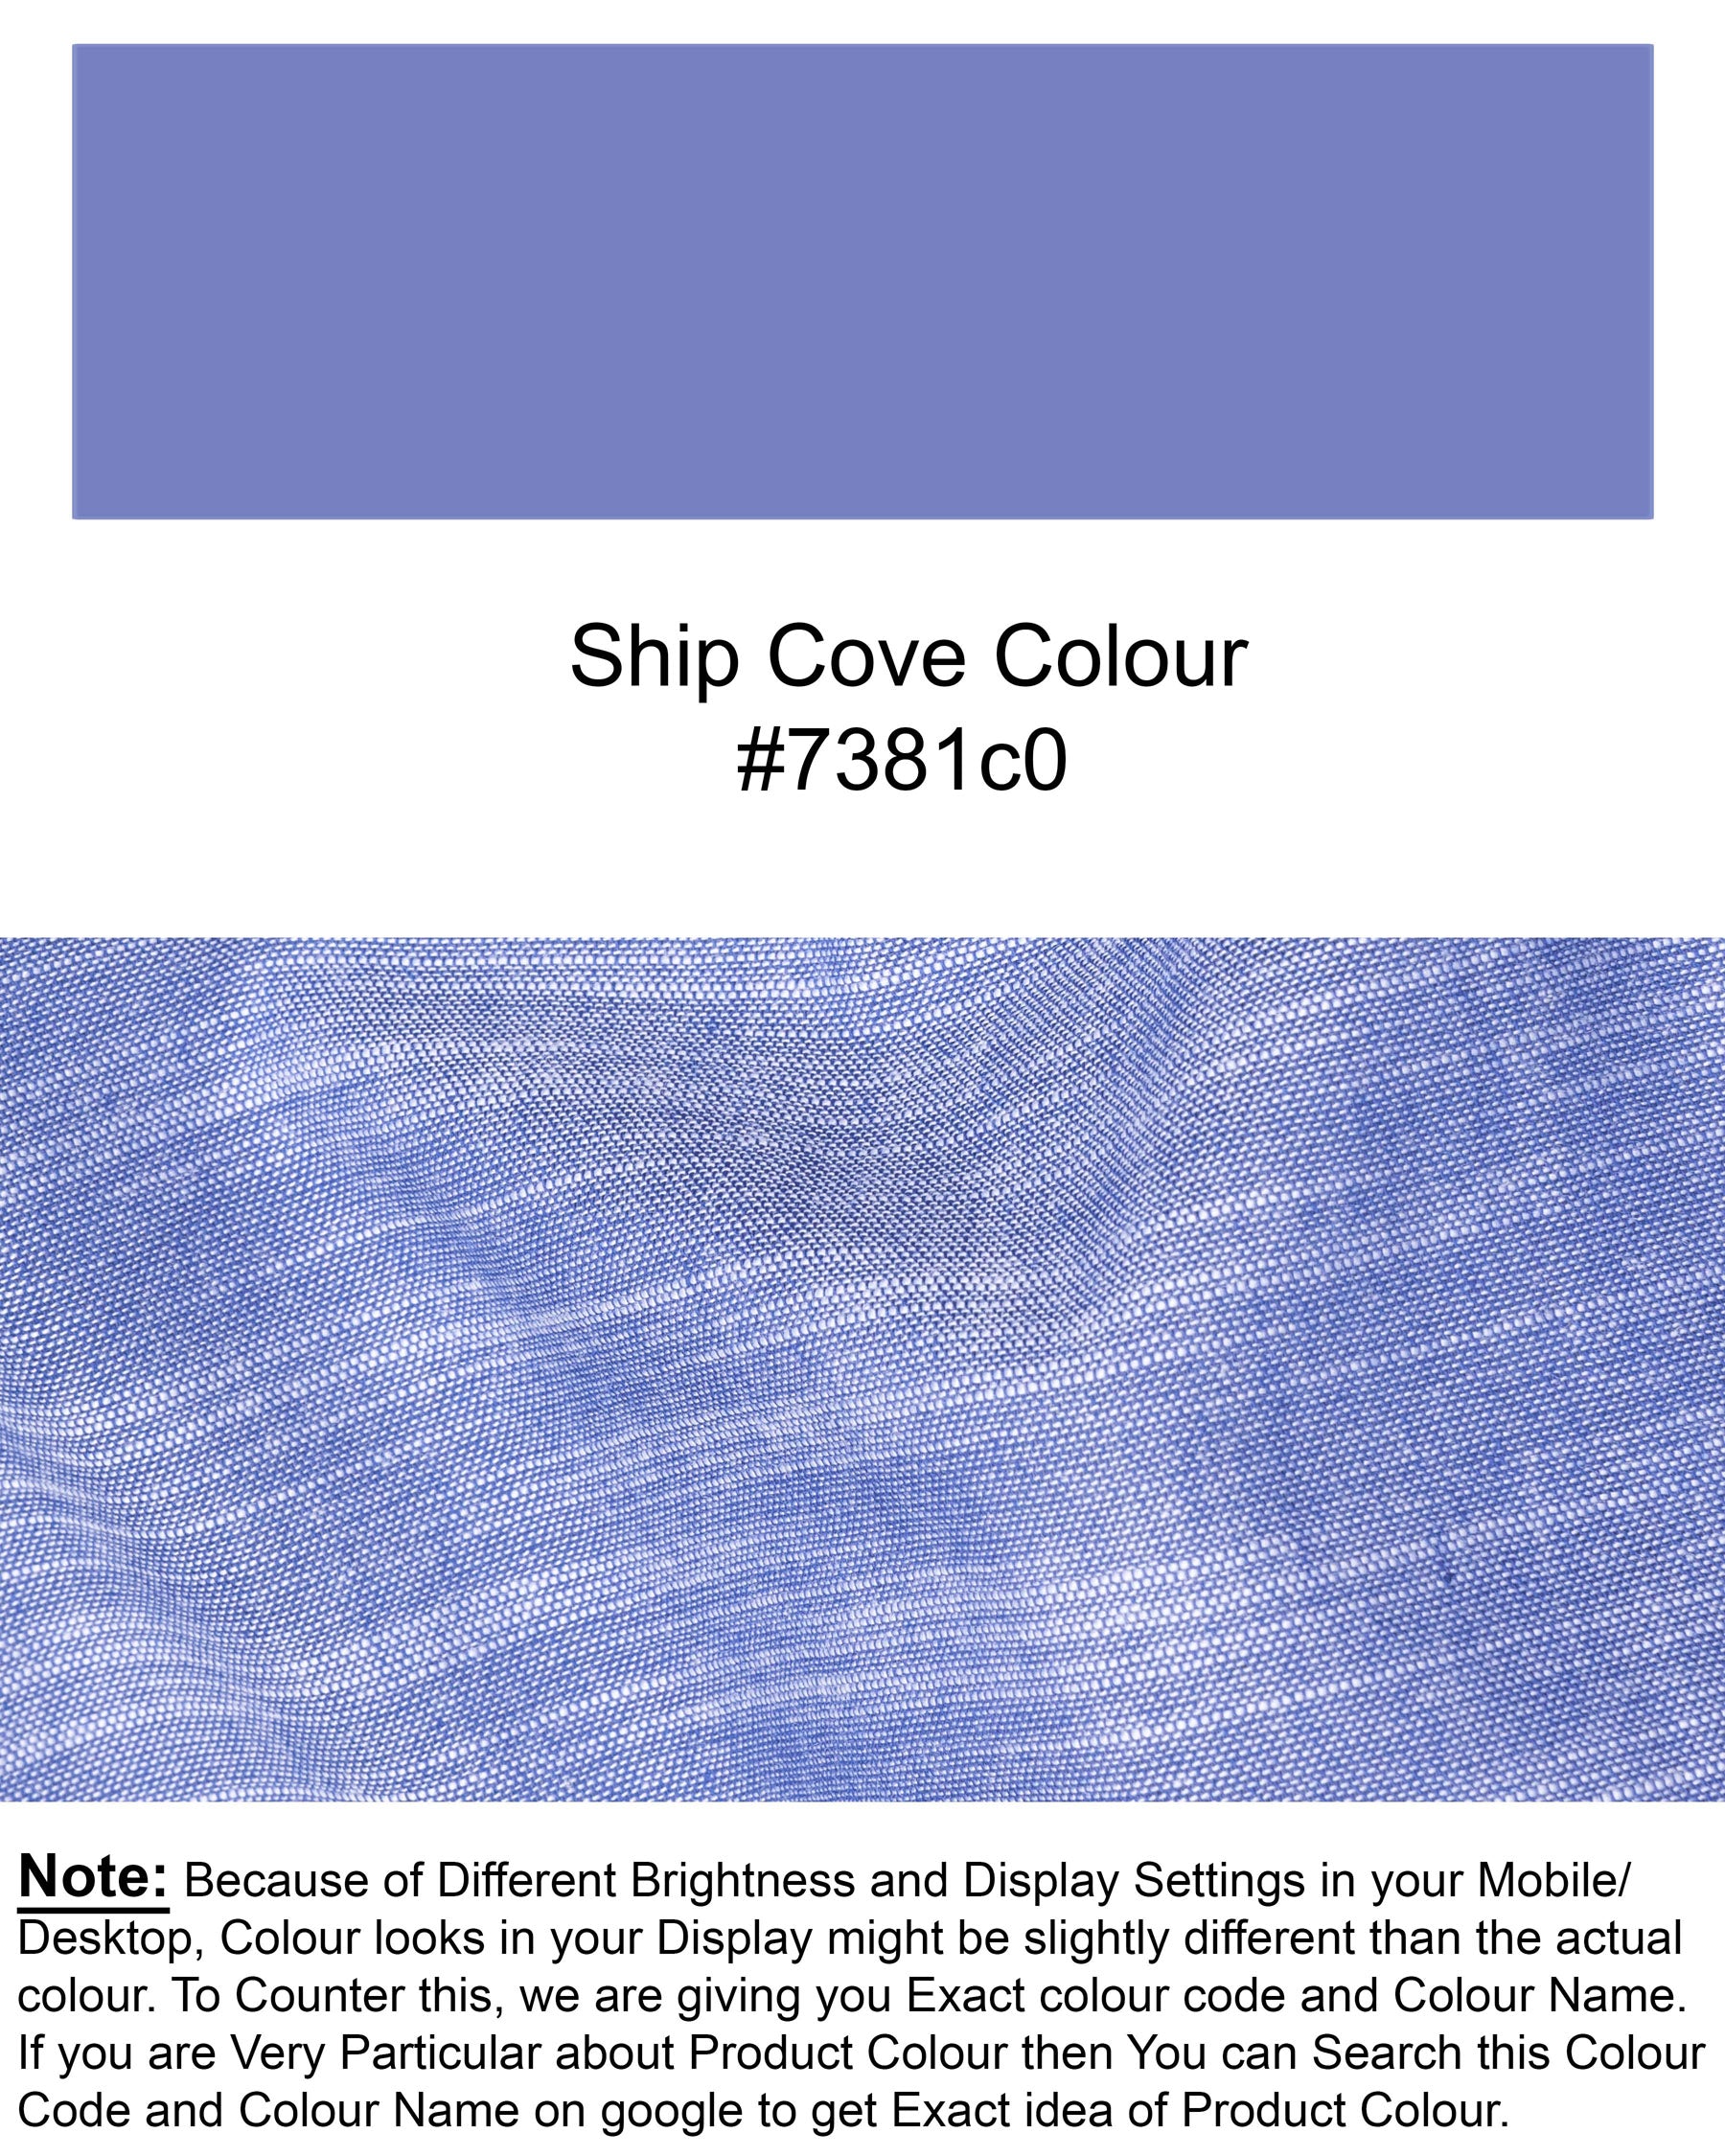 Ship Cove Blue Luxurious Linen Shirt 5660-BD-38, 5660-BD-H-38, 5660-BD-39, 5660-BD-H-39, 5660-BD-40, 5660-BD-H-40, 5660-BD-42, 5660-BD-H-42, 5660-BD-44, 5660-BD-H-44, 5660-BD-46, 5660-BD-H-46, 5660-BD-48, 5660-BD-H-48, 5660-BD-50, 5660-BD-H-50, 5660-BD-52, 5660-BD-H-52